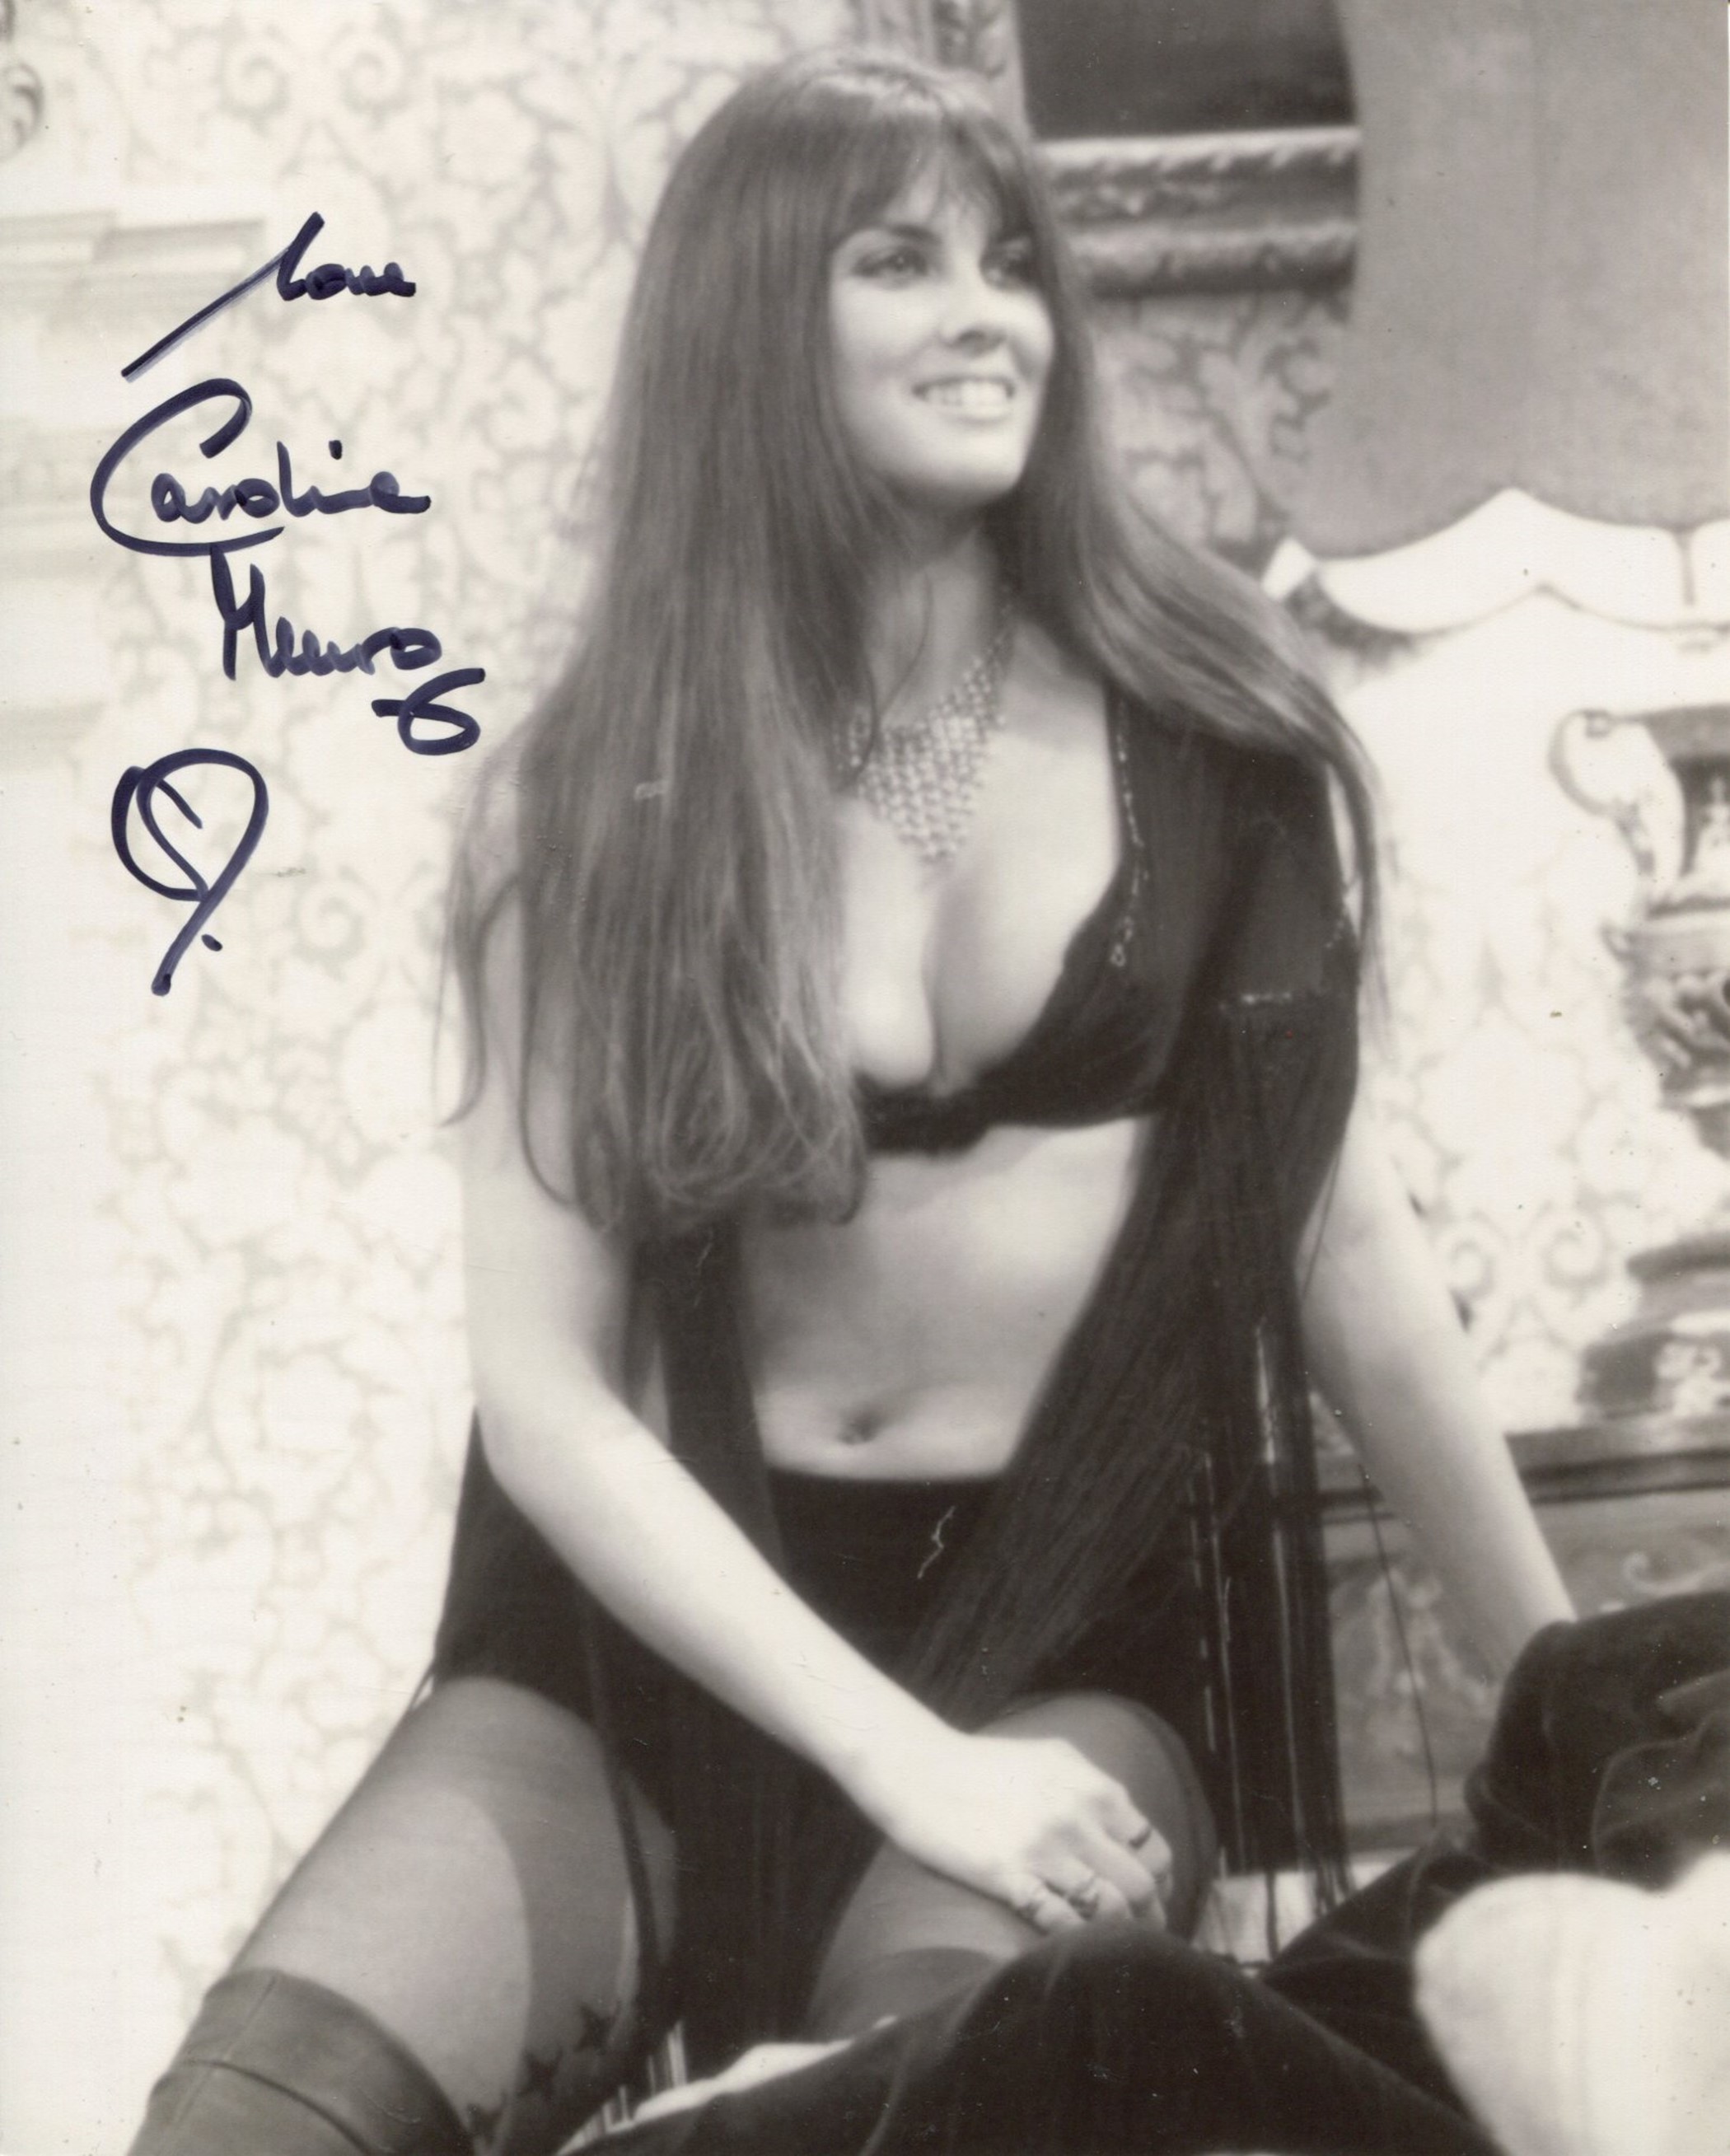 007 Bond actress Caroline Munro signed sexy pose 8x10 photo. All autographs come with a